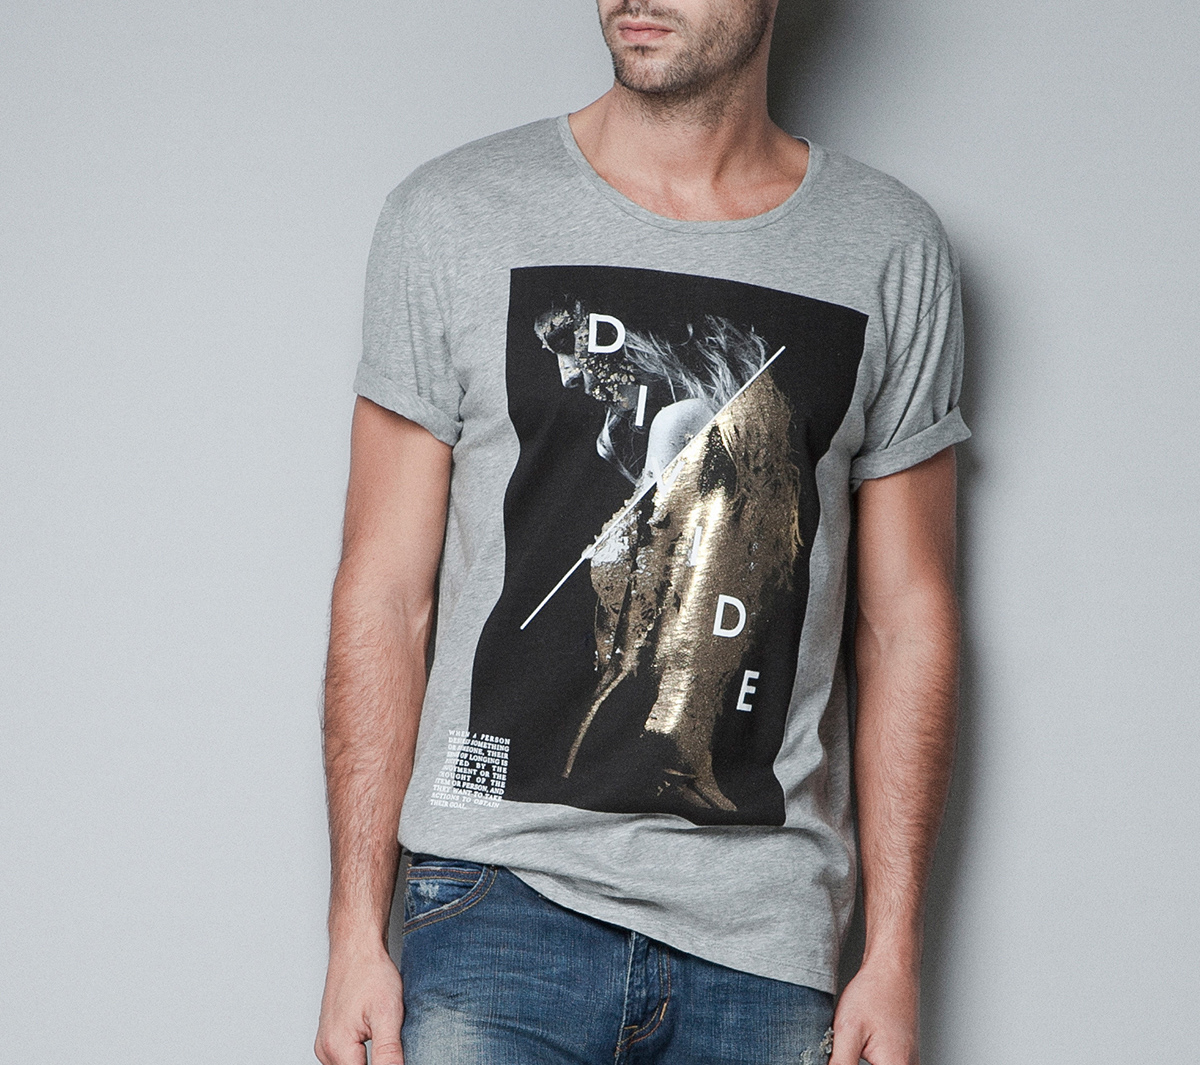 editorial print zara daniel marques t-shirt